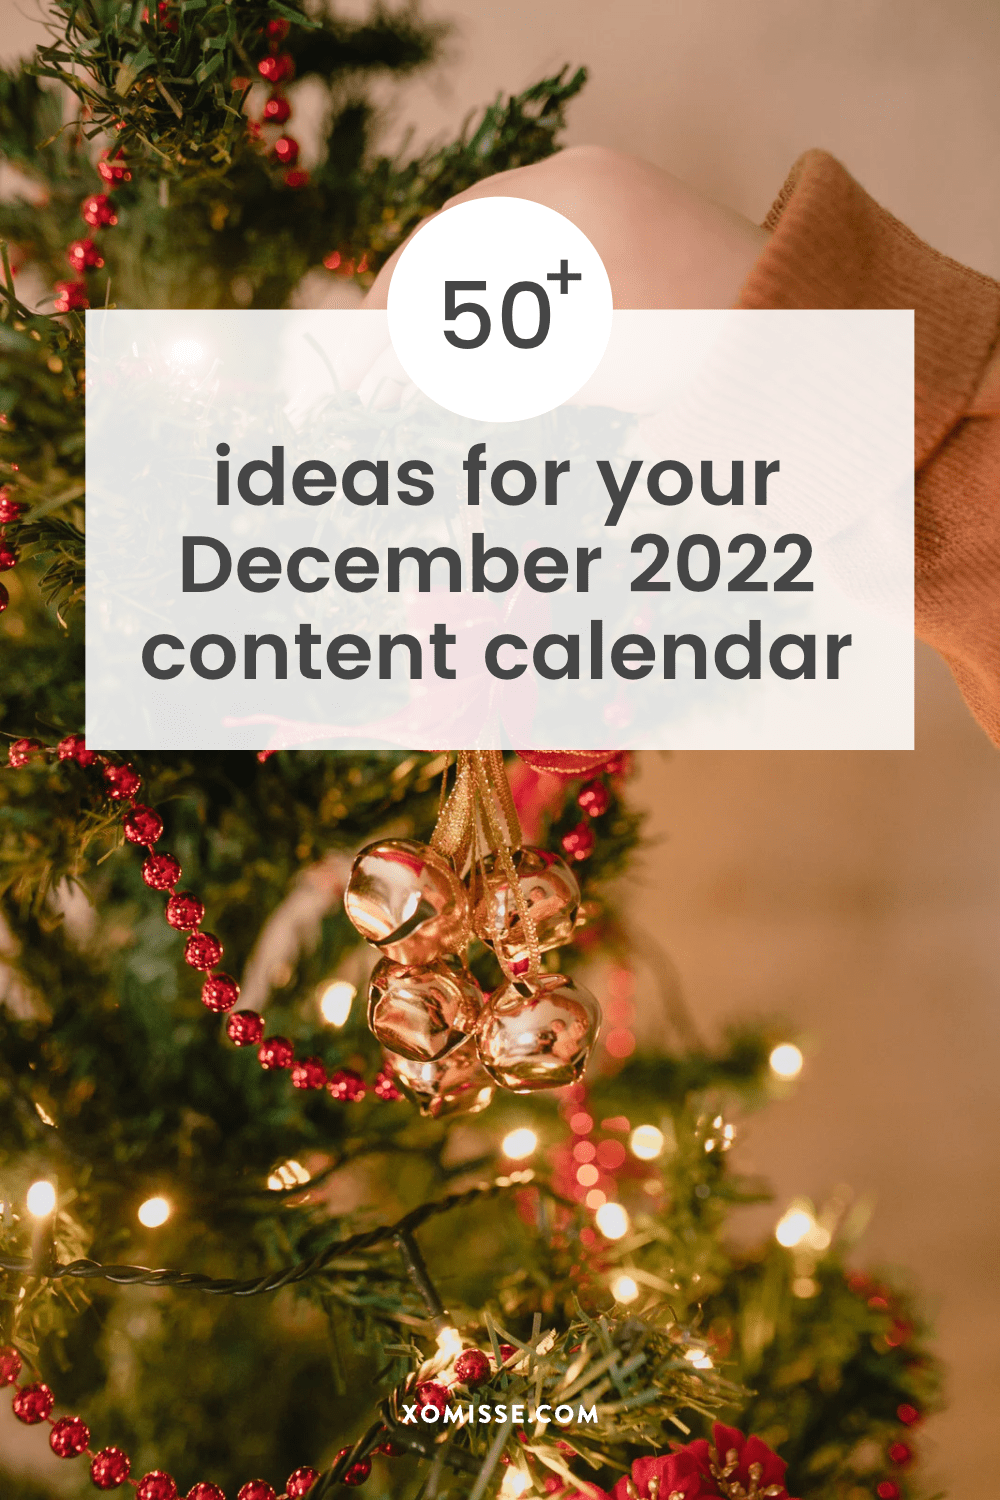 Content ideas for your December 2022 calendar